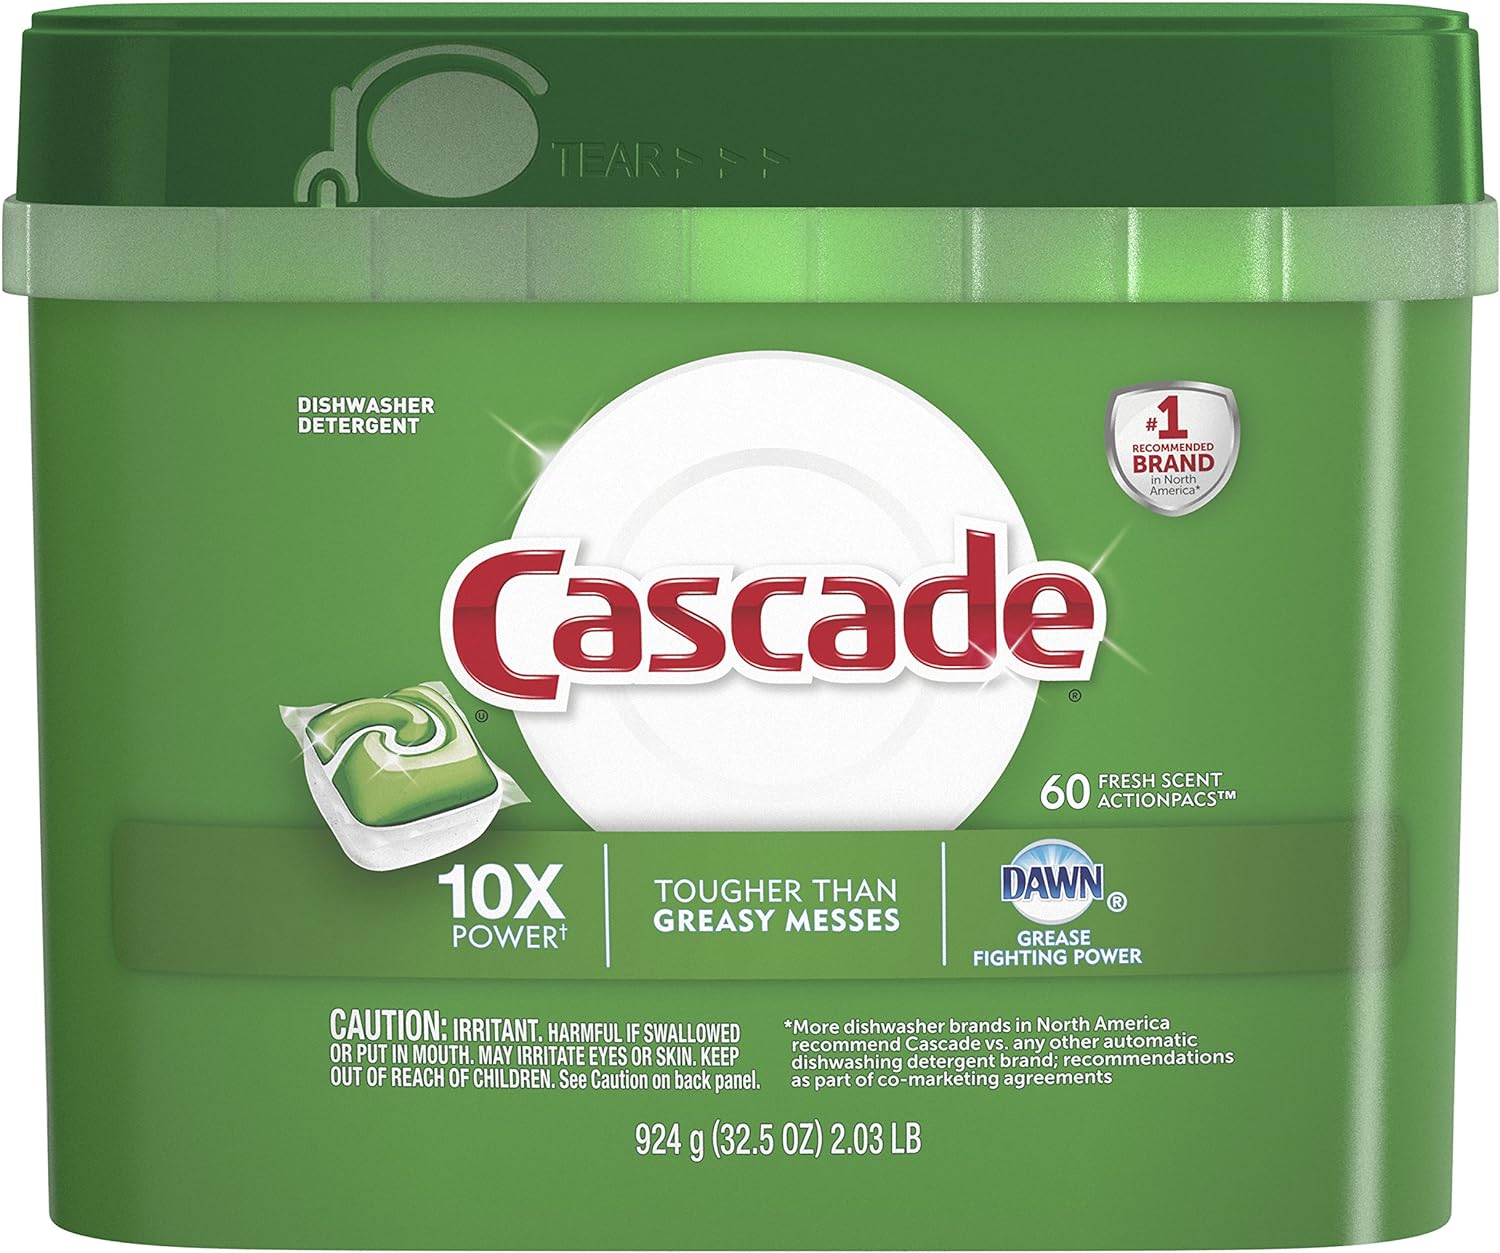 Cascade ActionPacs Fresh Scent Dishwasher Detergent 60 Count